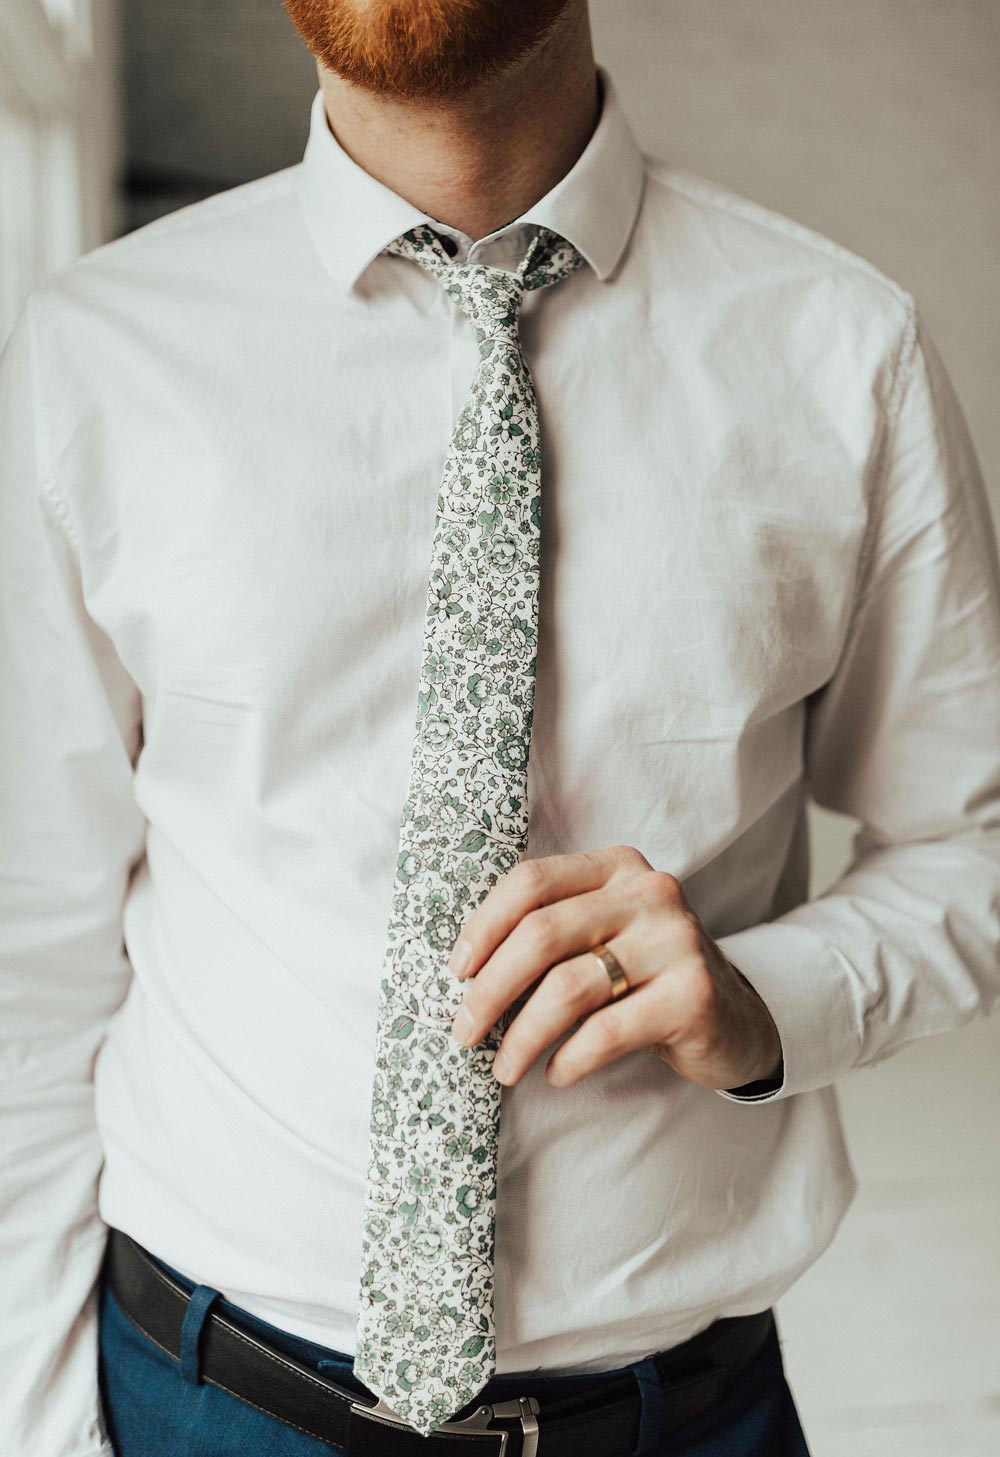 Hidden Garden tie worn with a white shirt, black belt and blue pants.